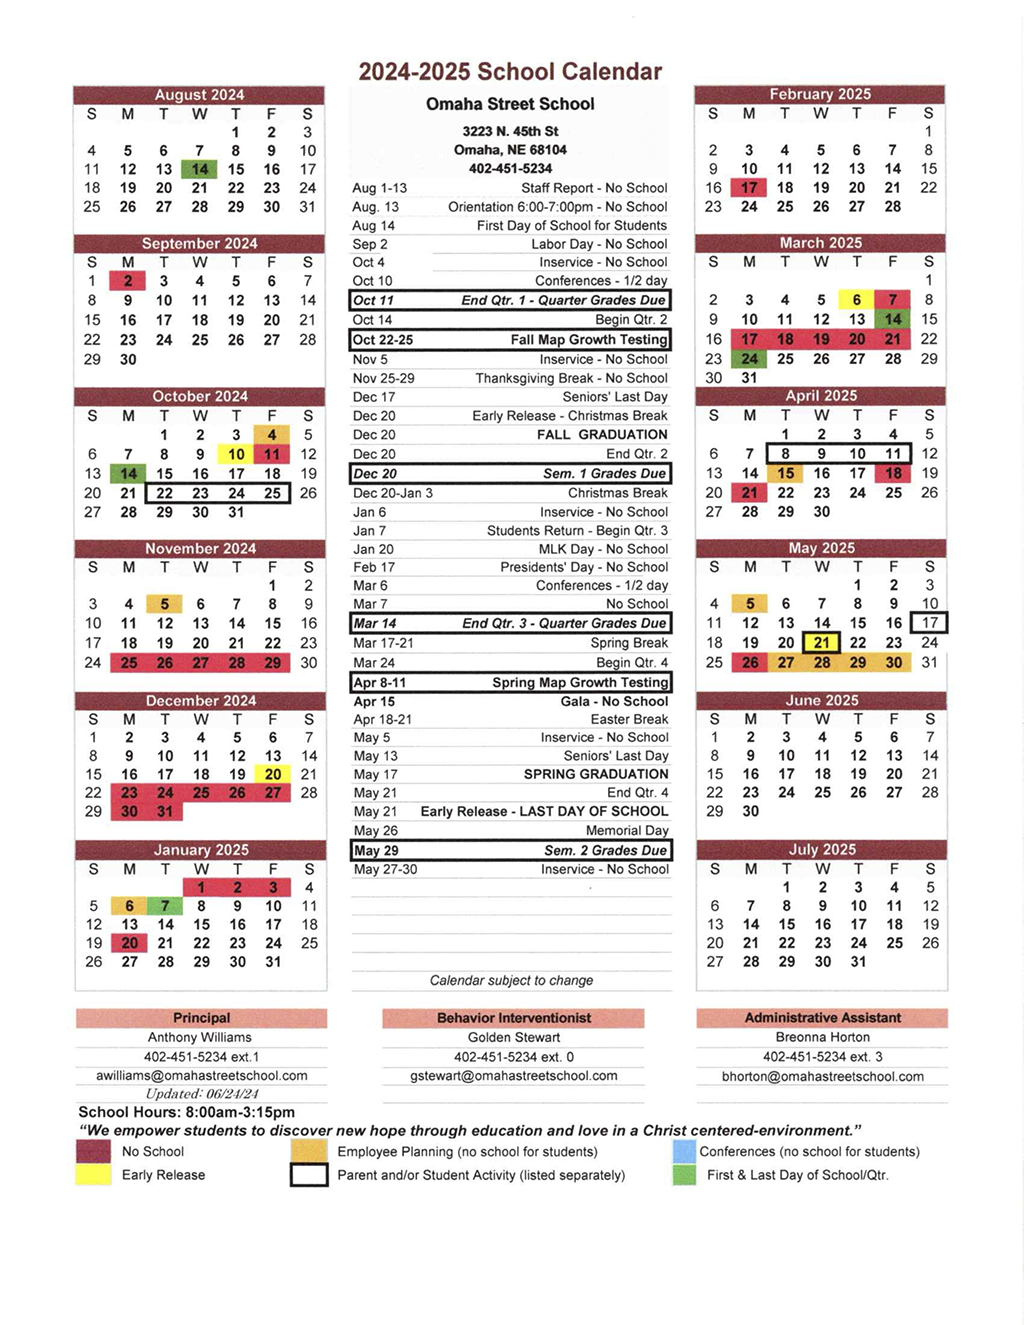 2024-2025 Omaha Street School Calendar